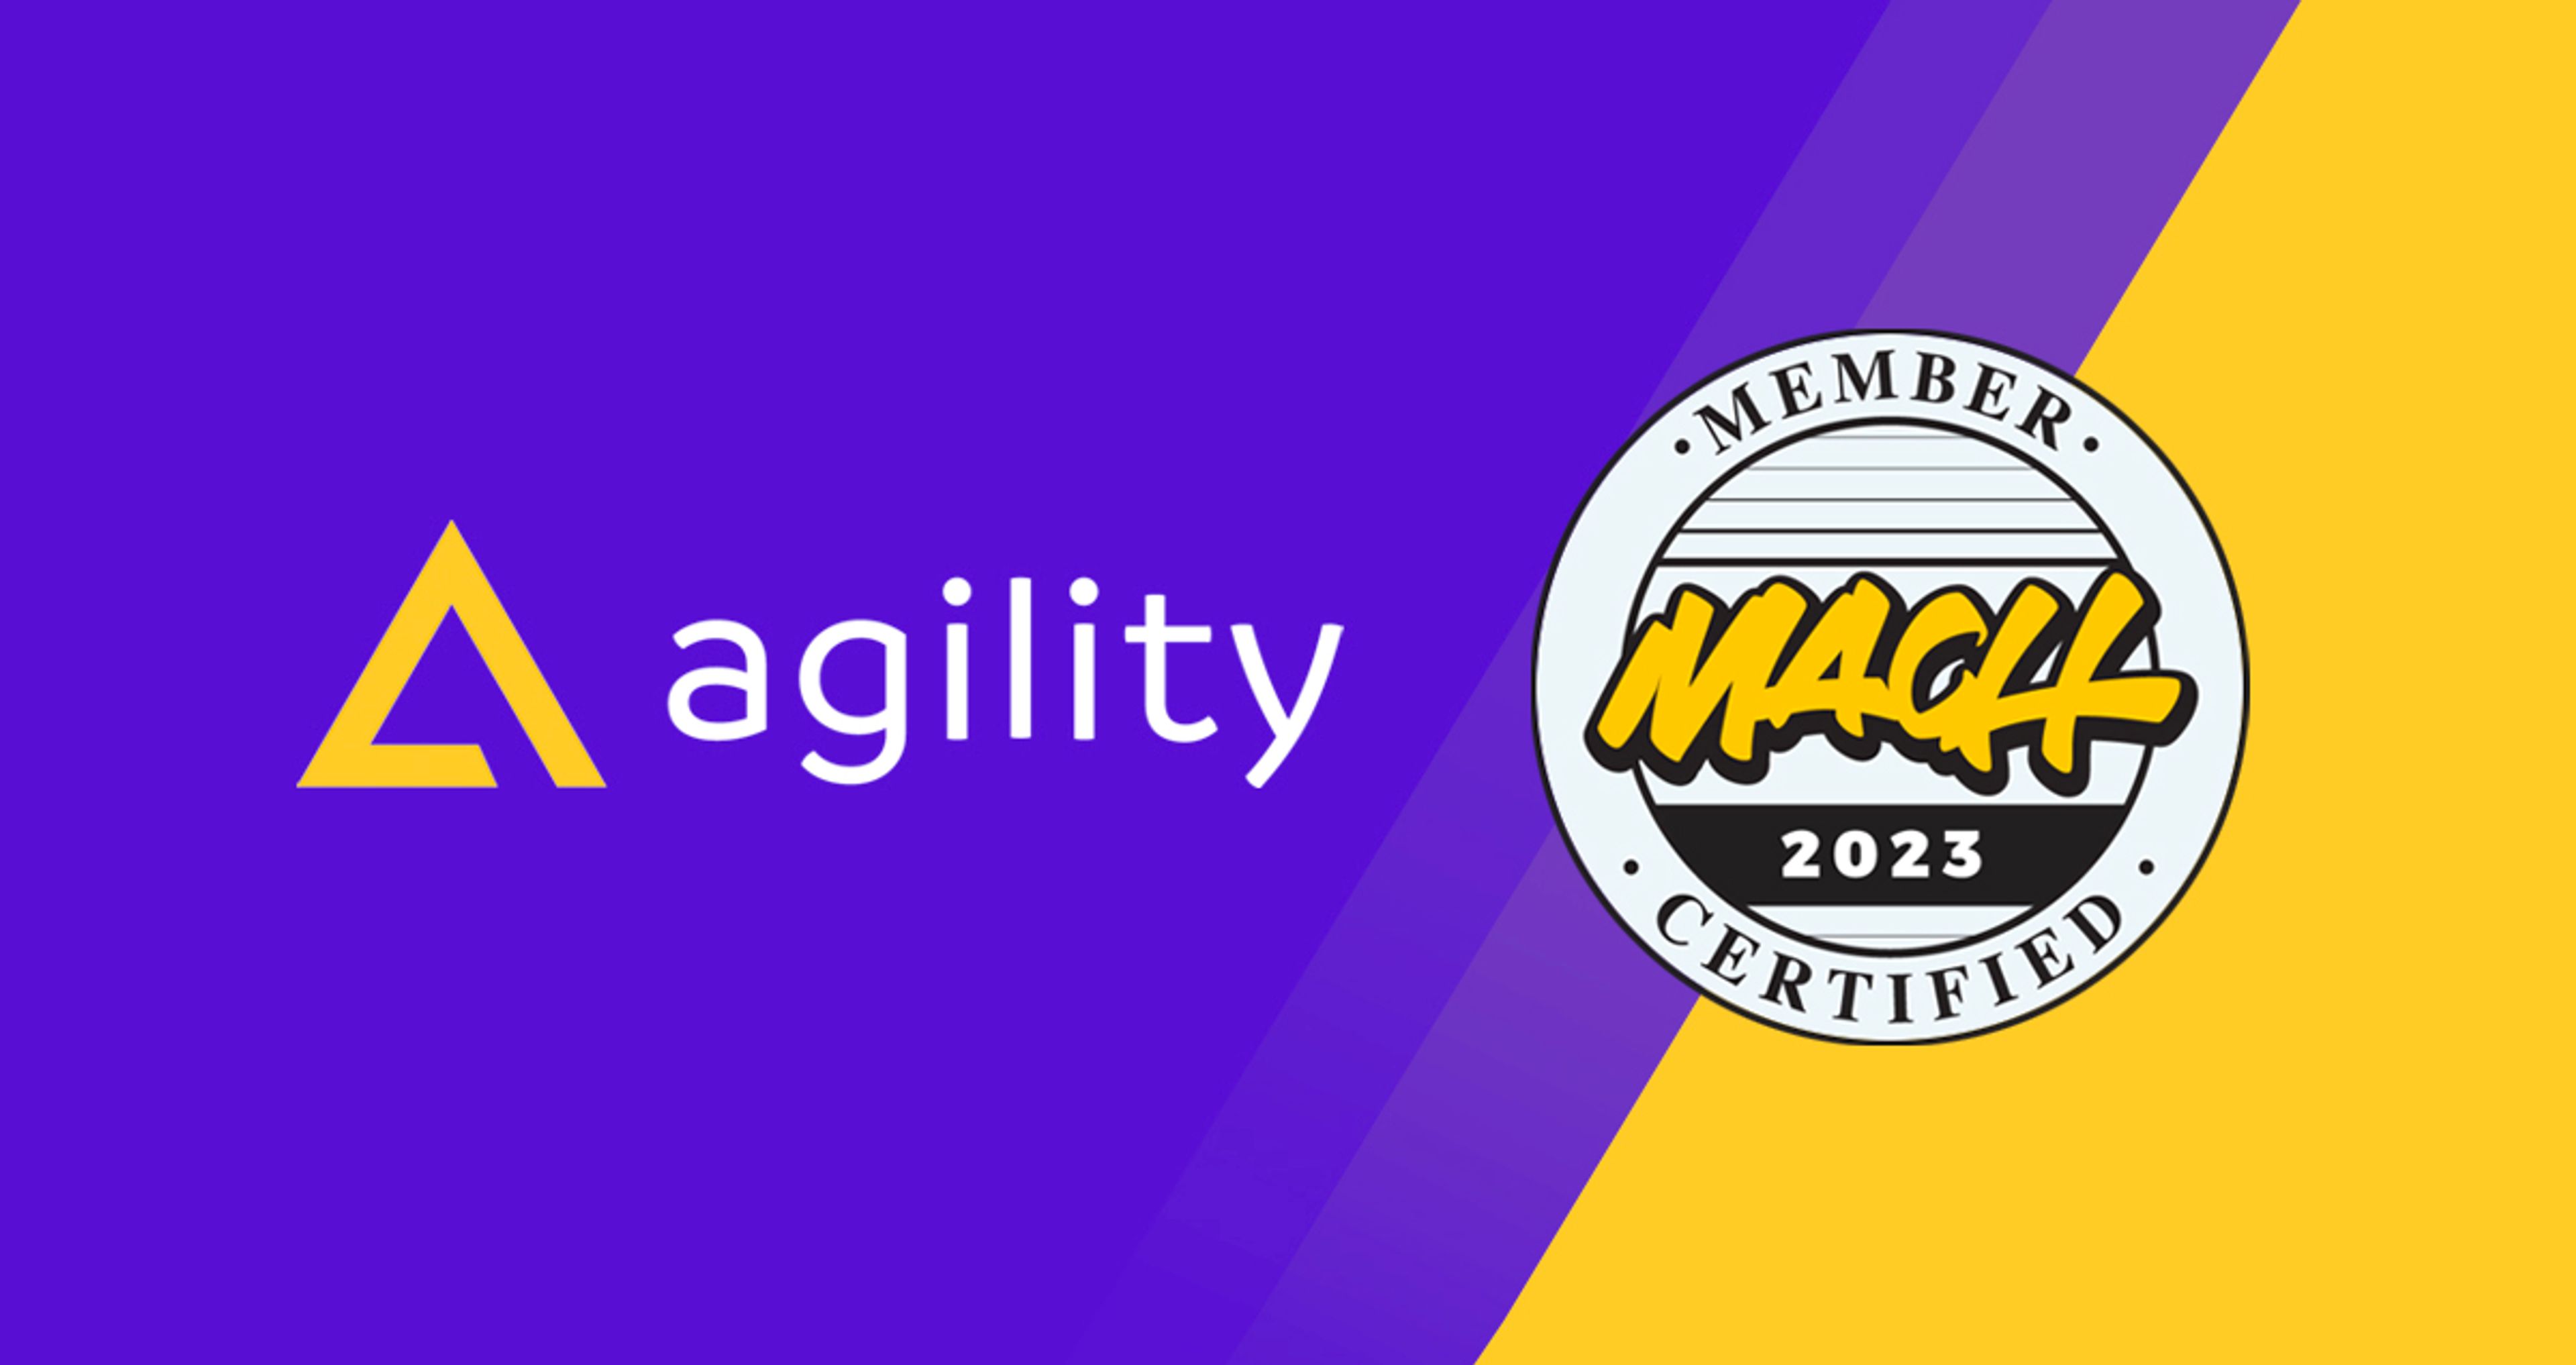 Agility CMS logo and MACH Certified emblem